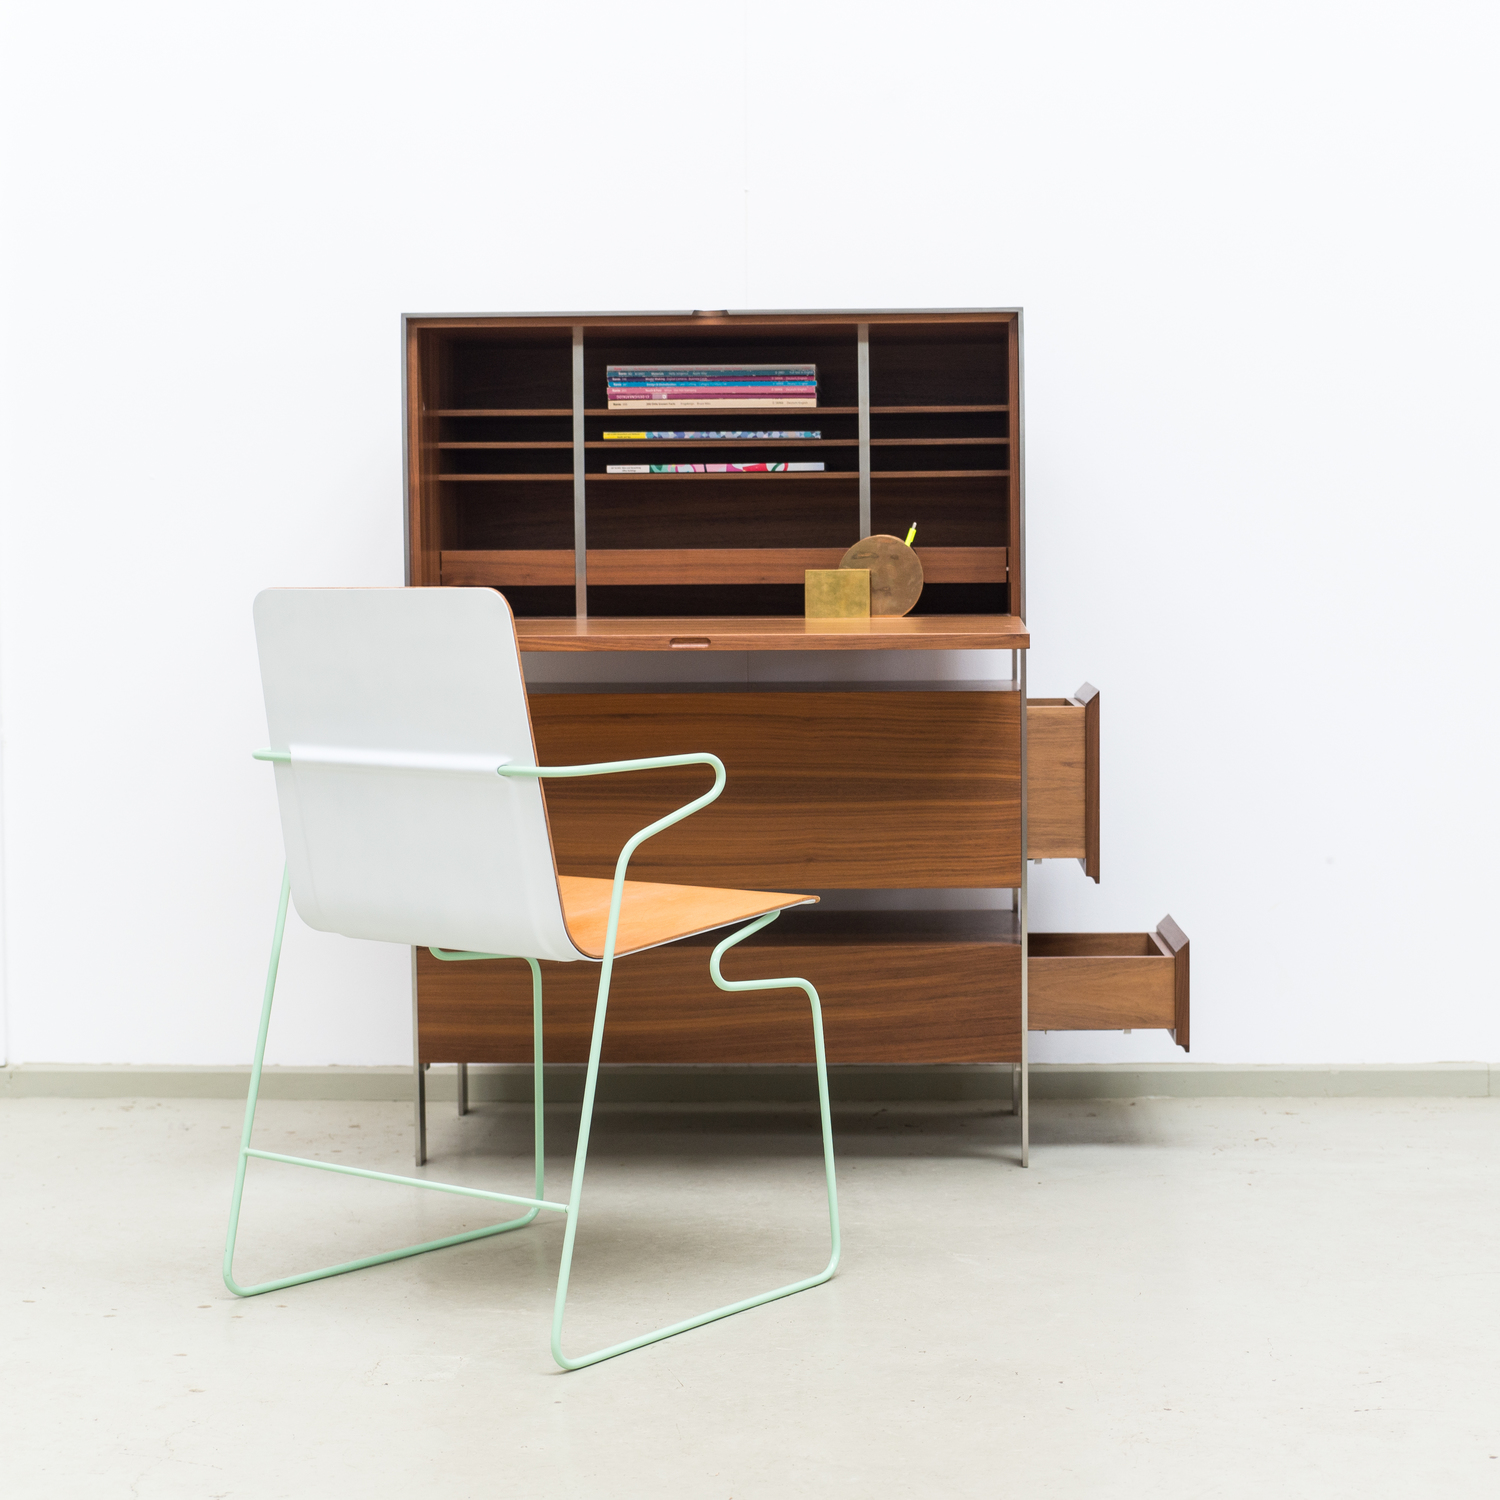 Bender Chair / Frederik Kurzweg Design Studio (2)